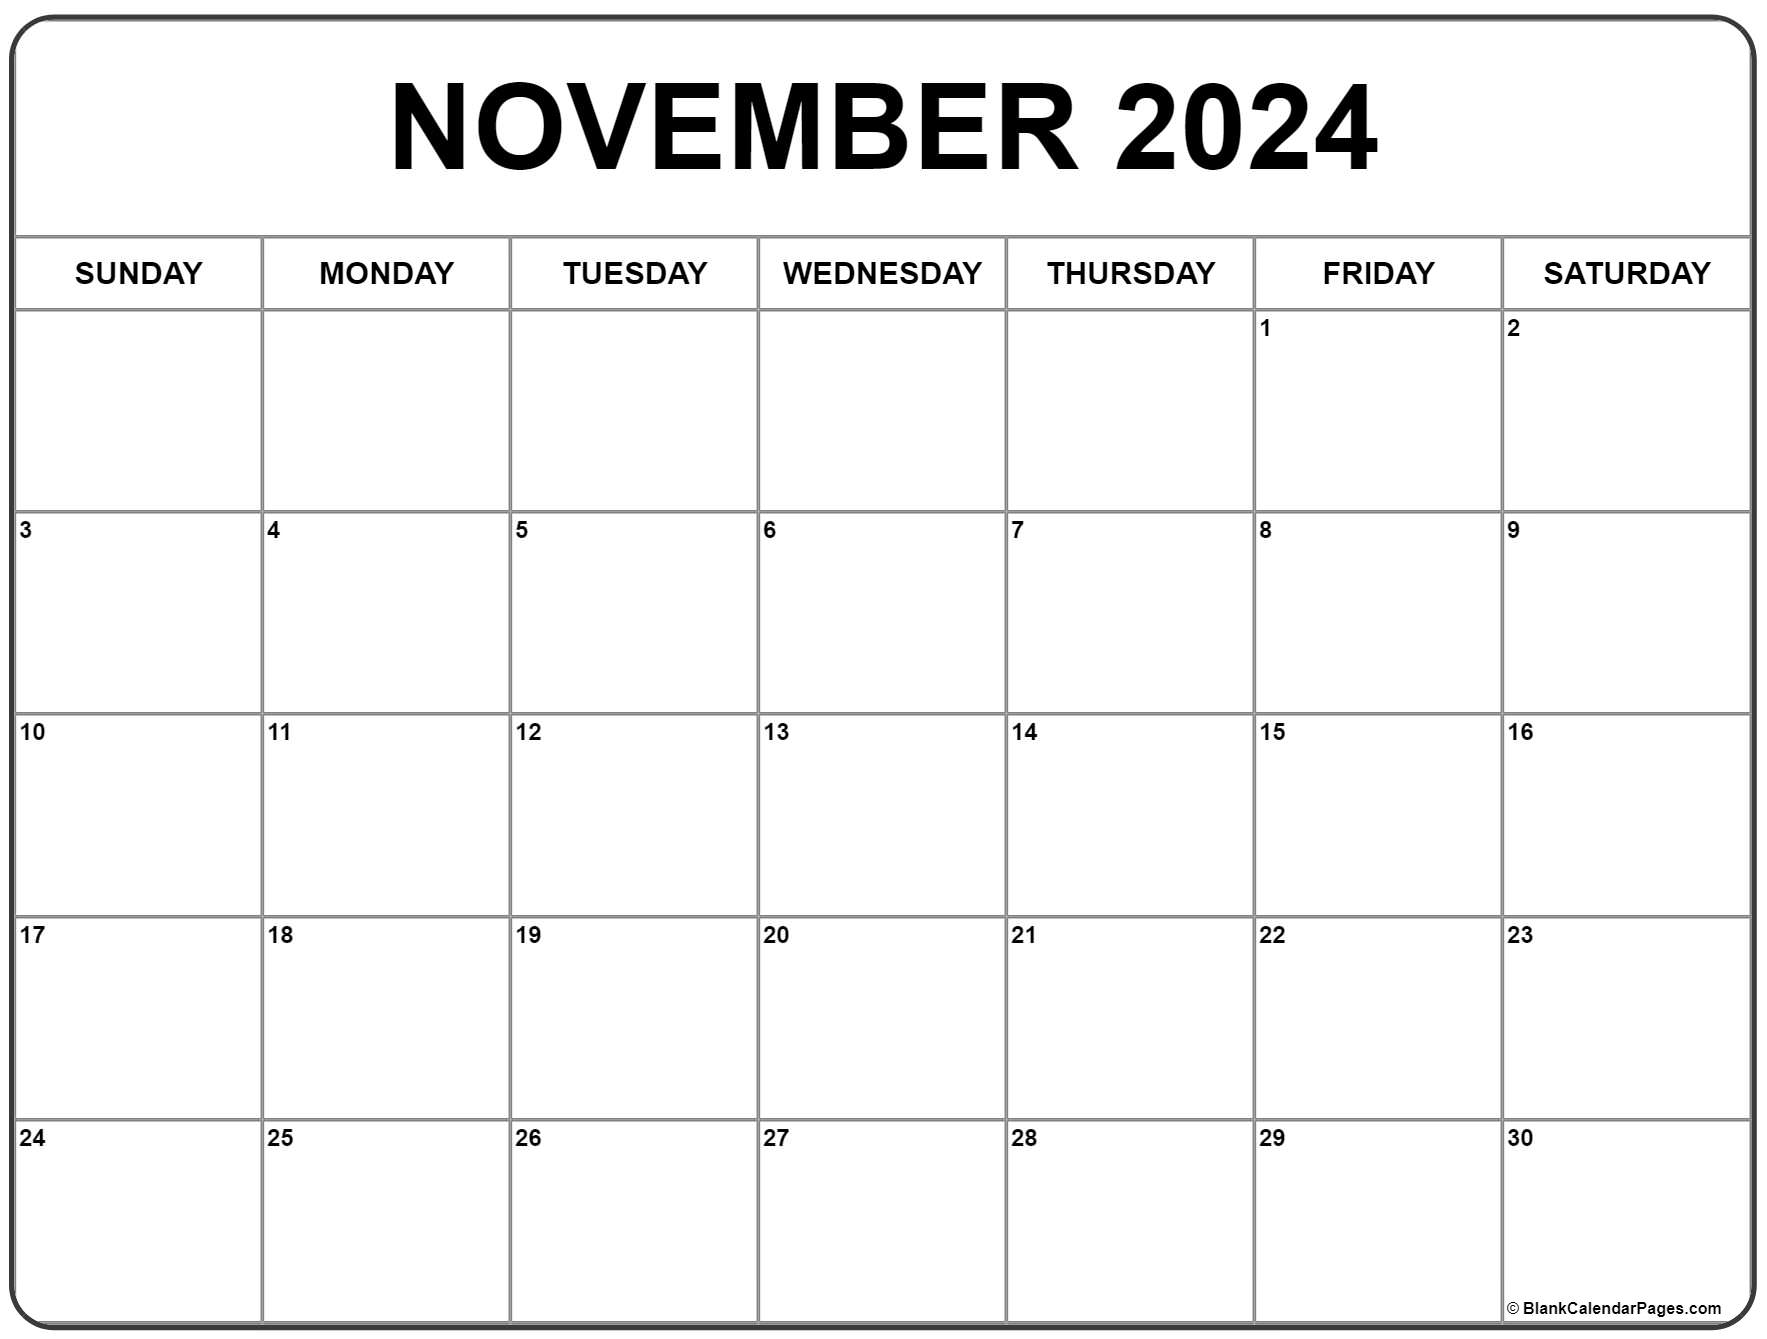 November Calendar For 2022 November 2022 Calendar | Free Printable Calendar Templates